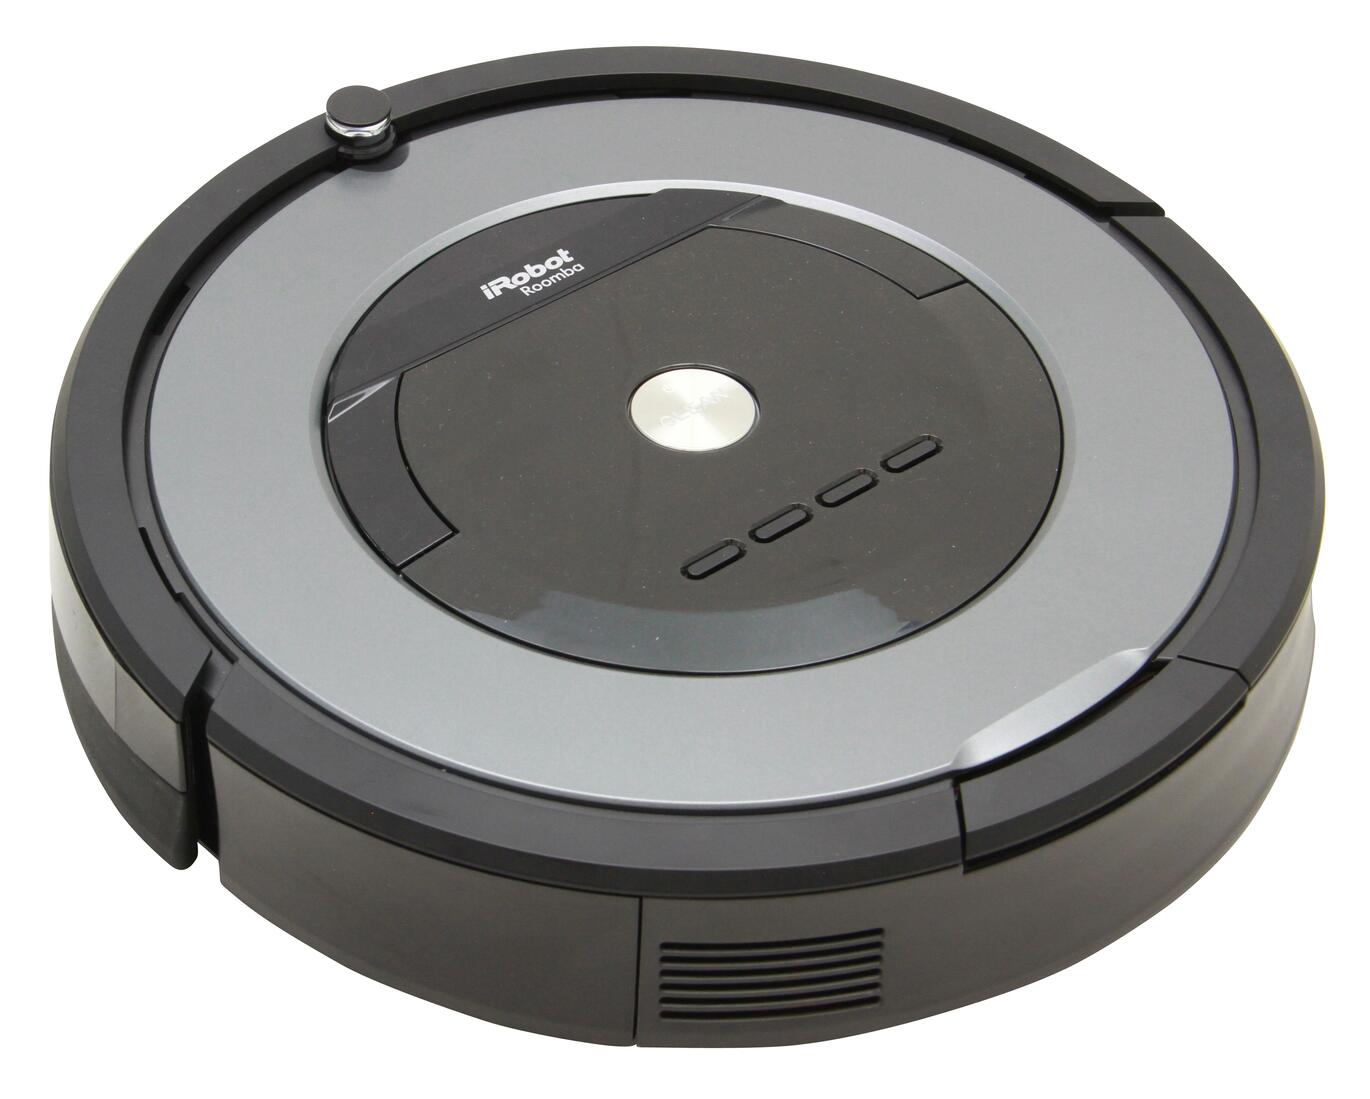 Roomba 865 iRobot